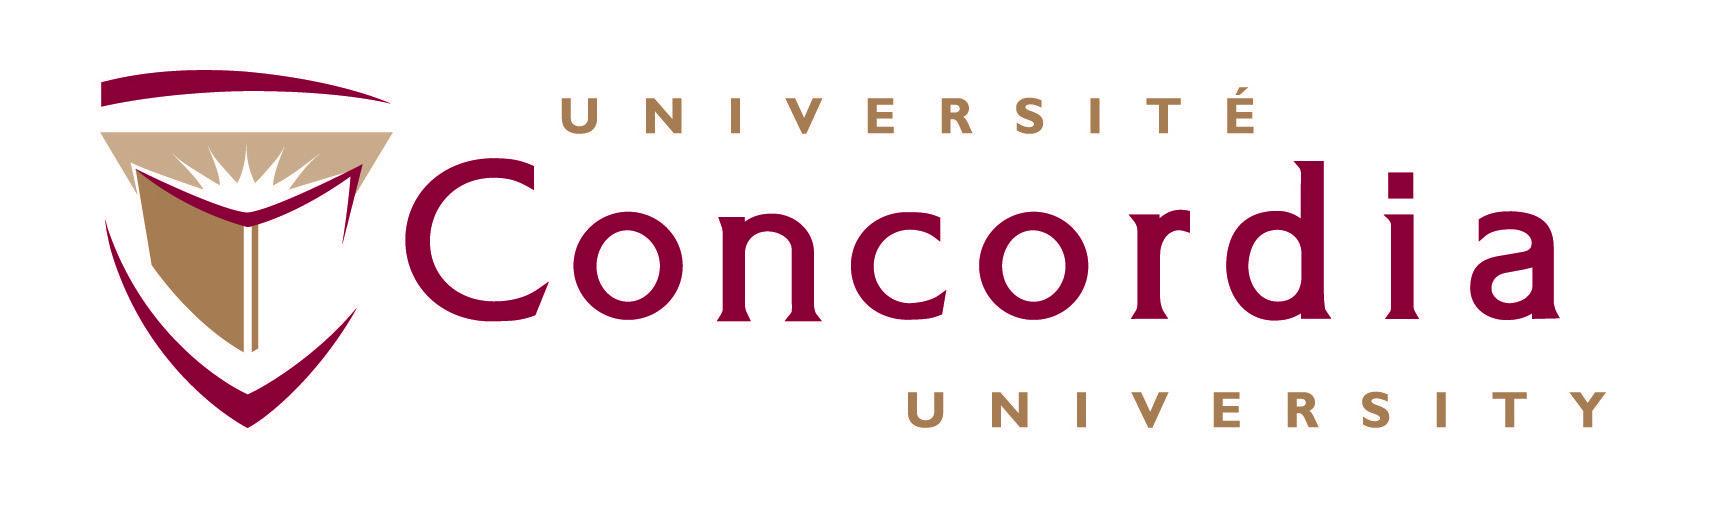 Concordia-logo.jpeg